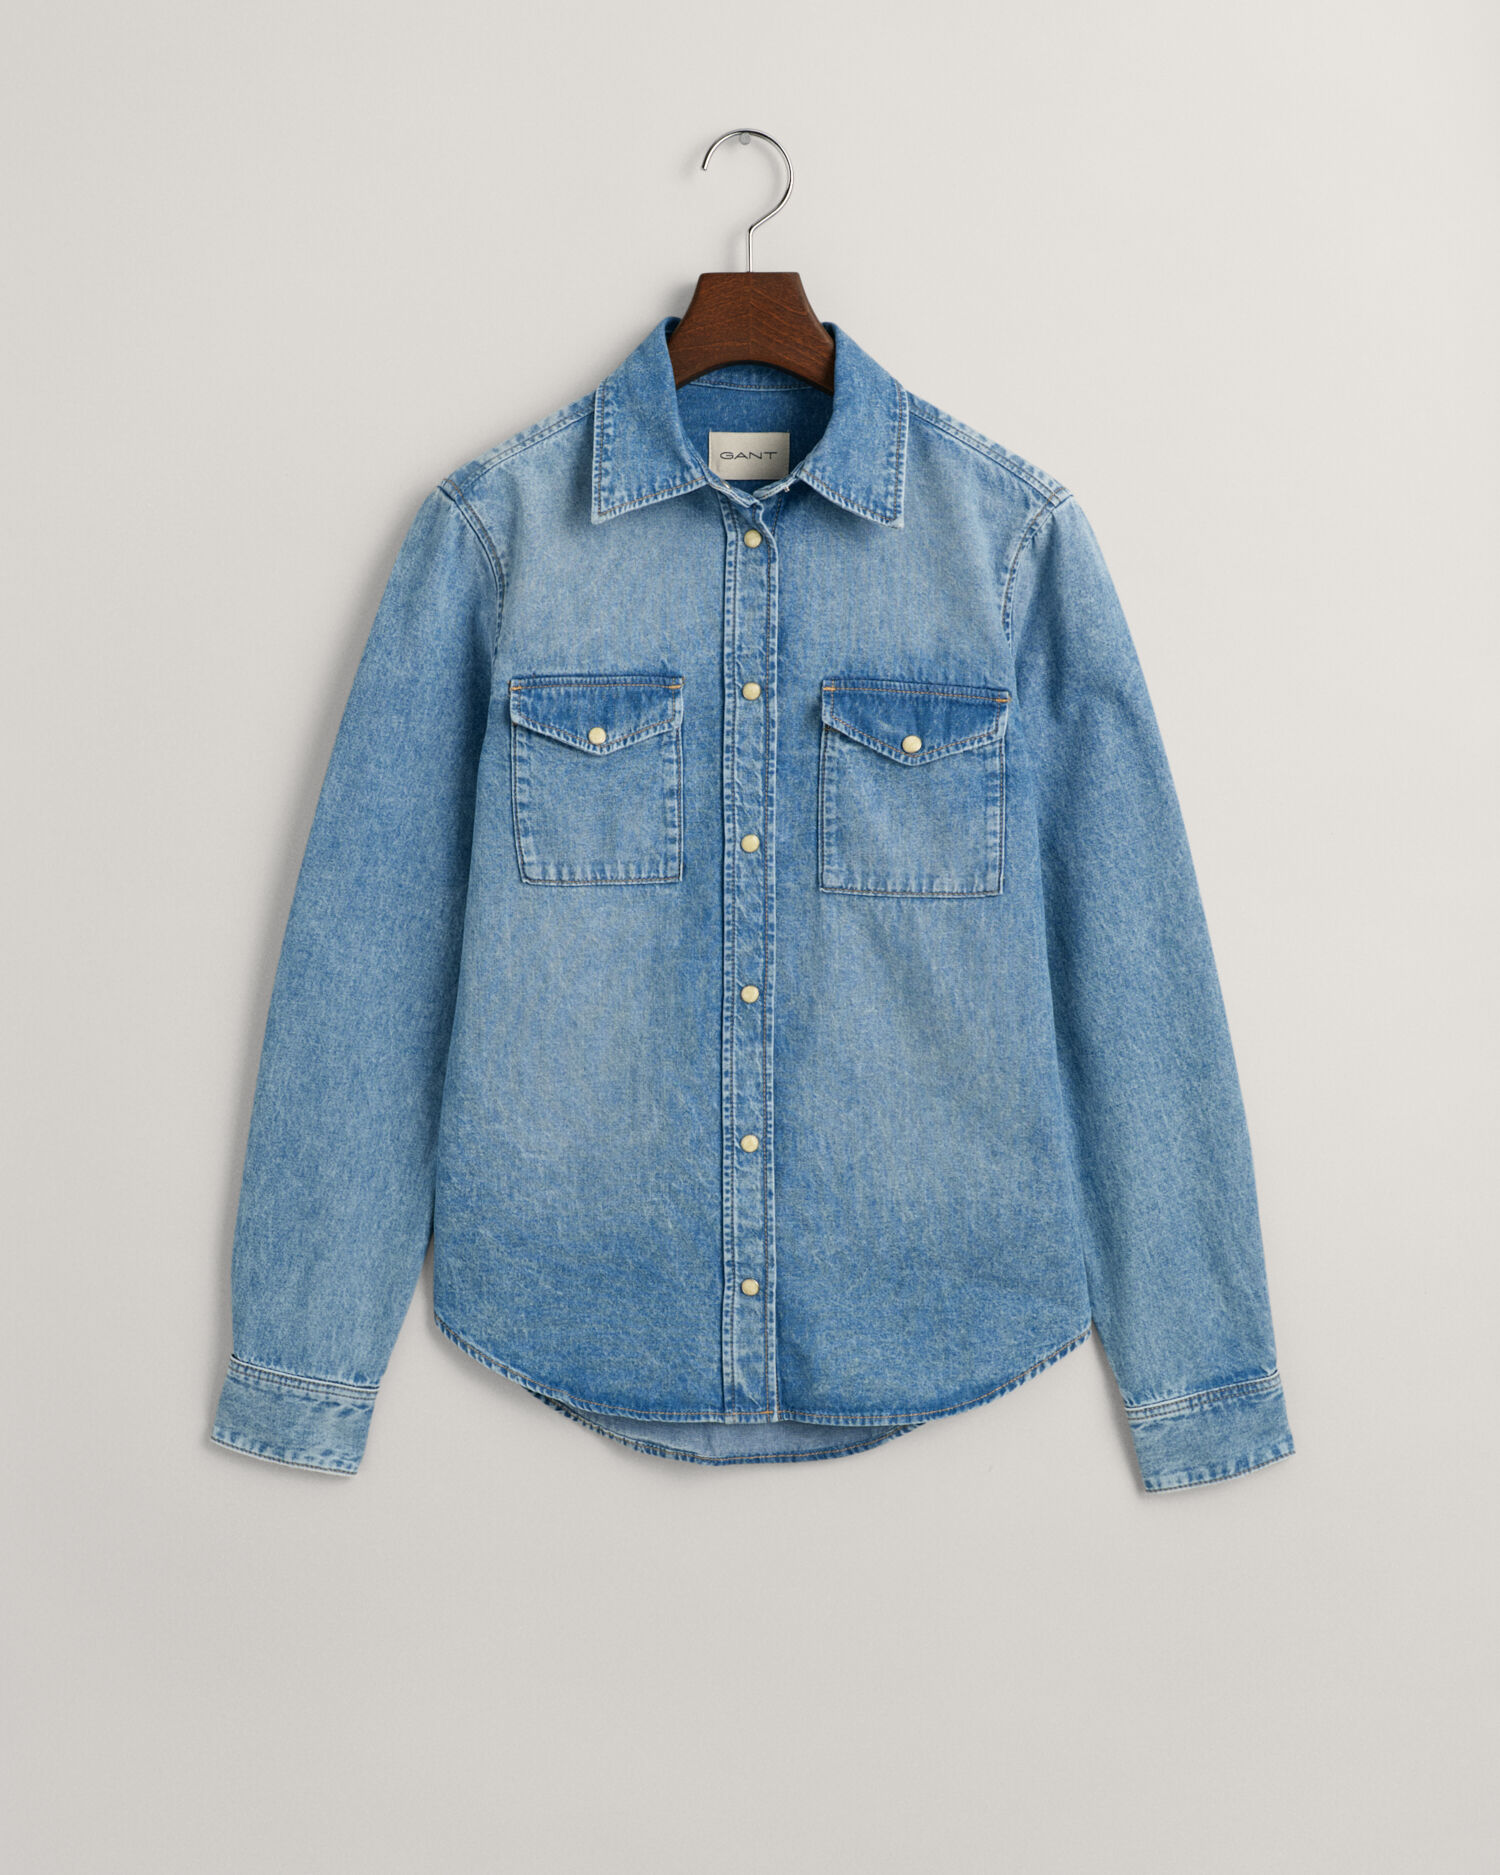 Hunters Peak Rugged Wear Mens Button Front Denim Shirt Blue Large Cotton |  eBay